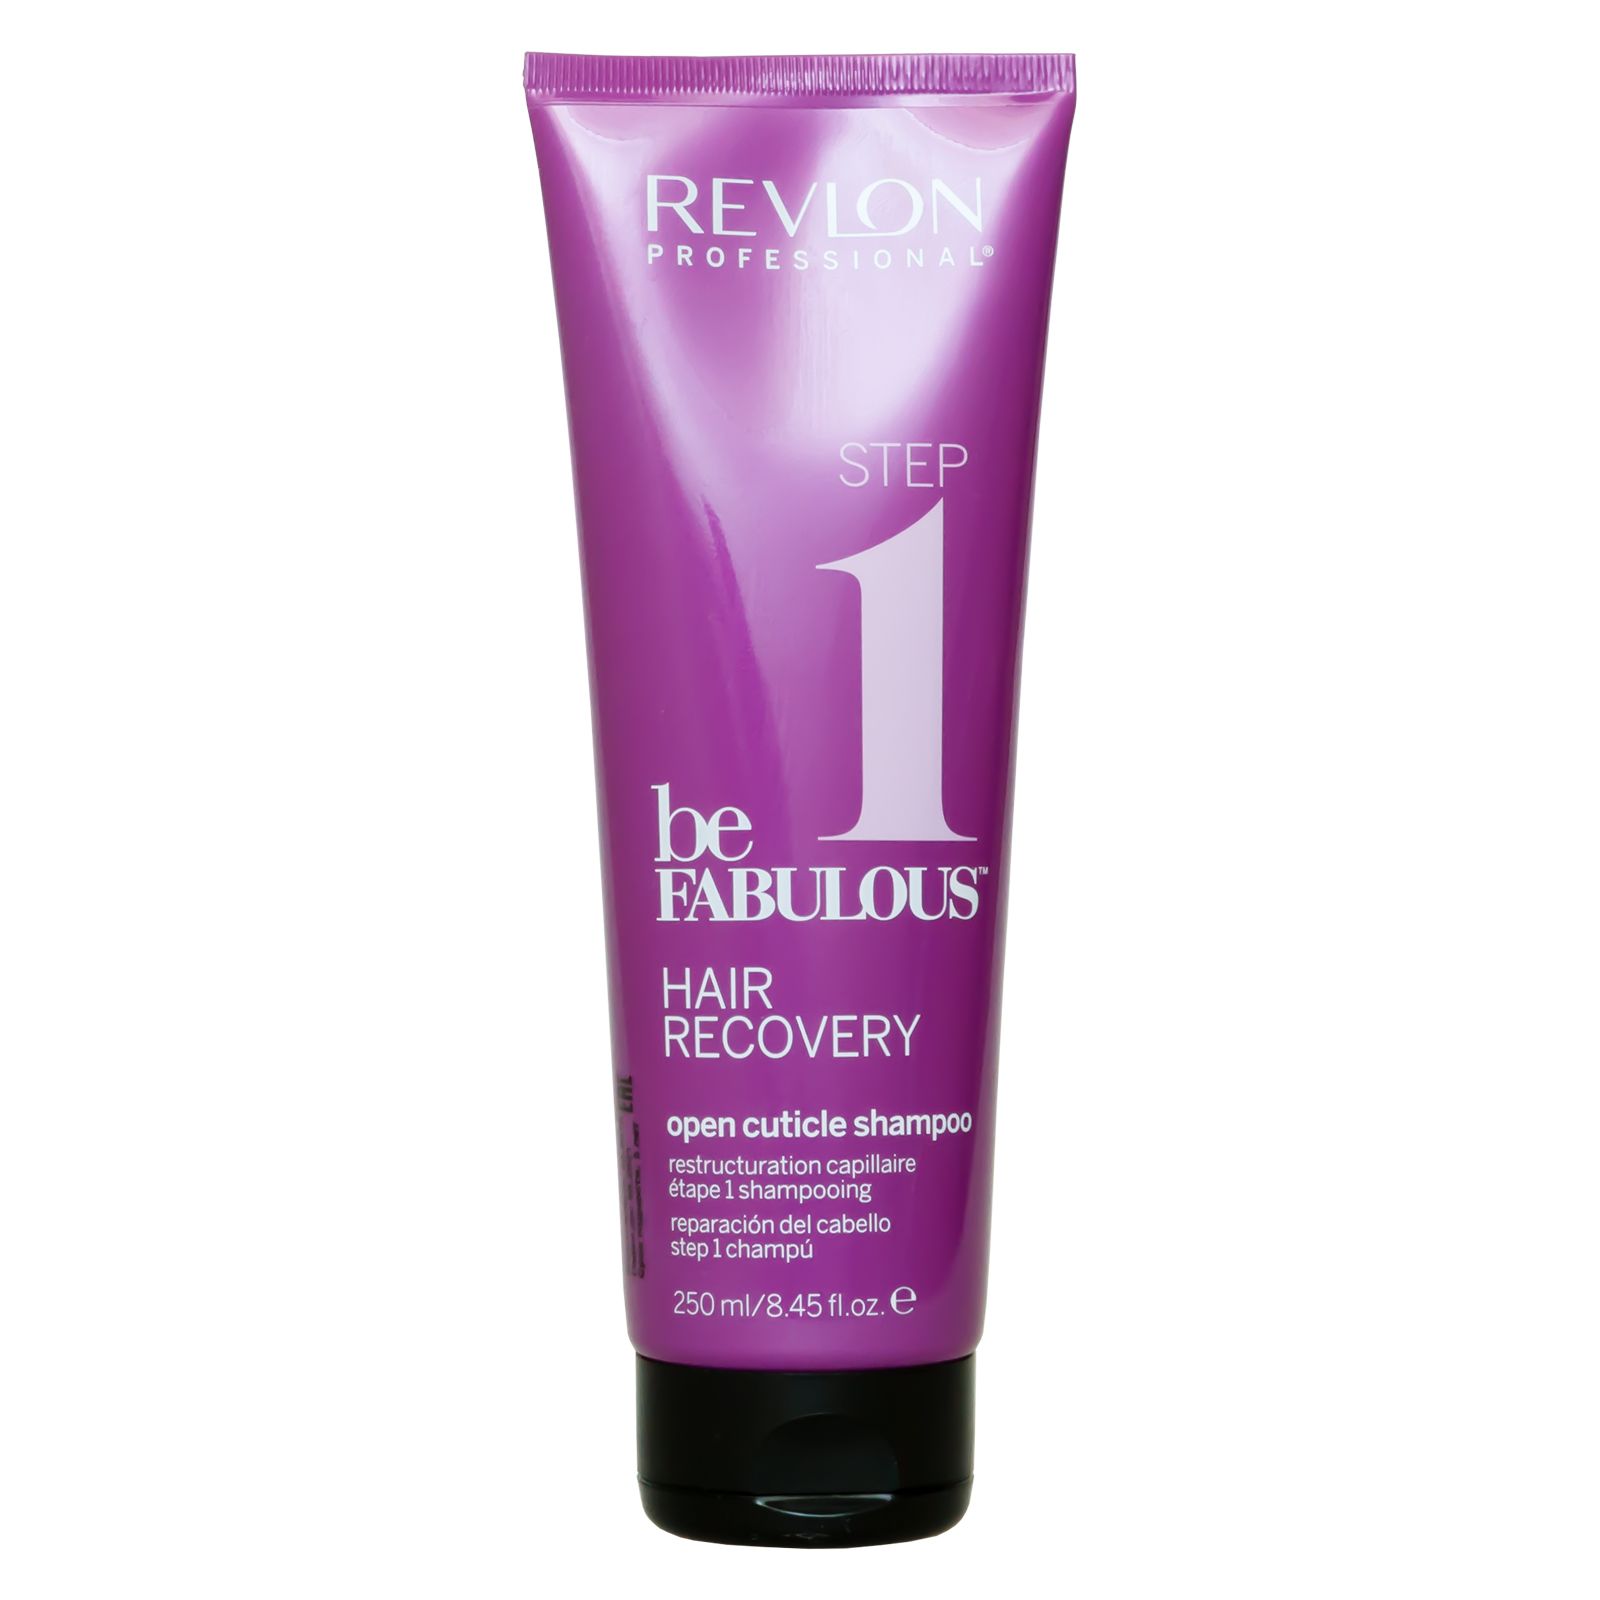 Купить Revlon Professional Be Fabulous Hair Recovery Open Cuticle Shampoo Step 1 - Шаг 1. Шампунь, открывающий кутикулу 250 мл, Revlon Professional (Испания)